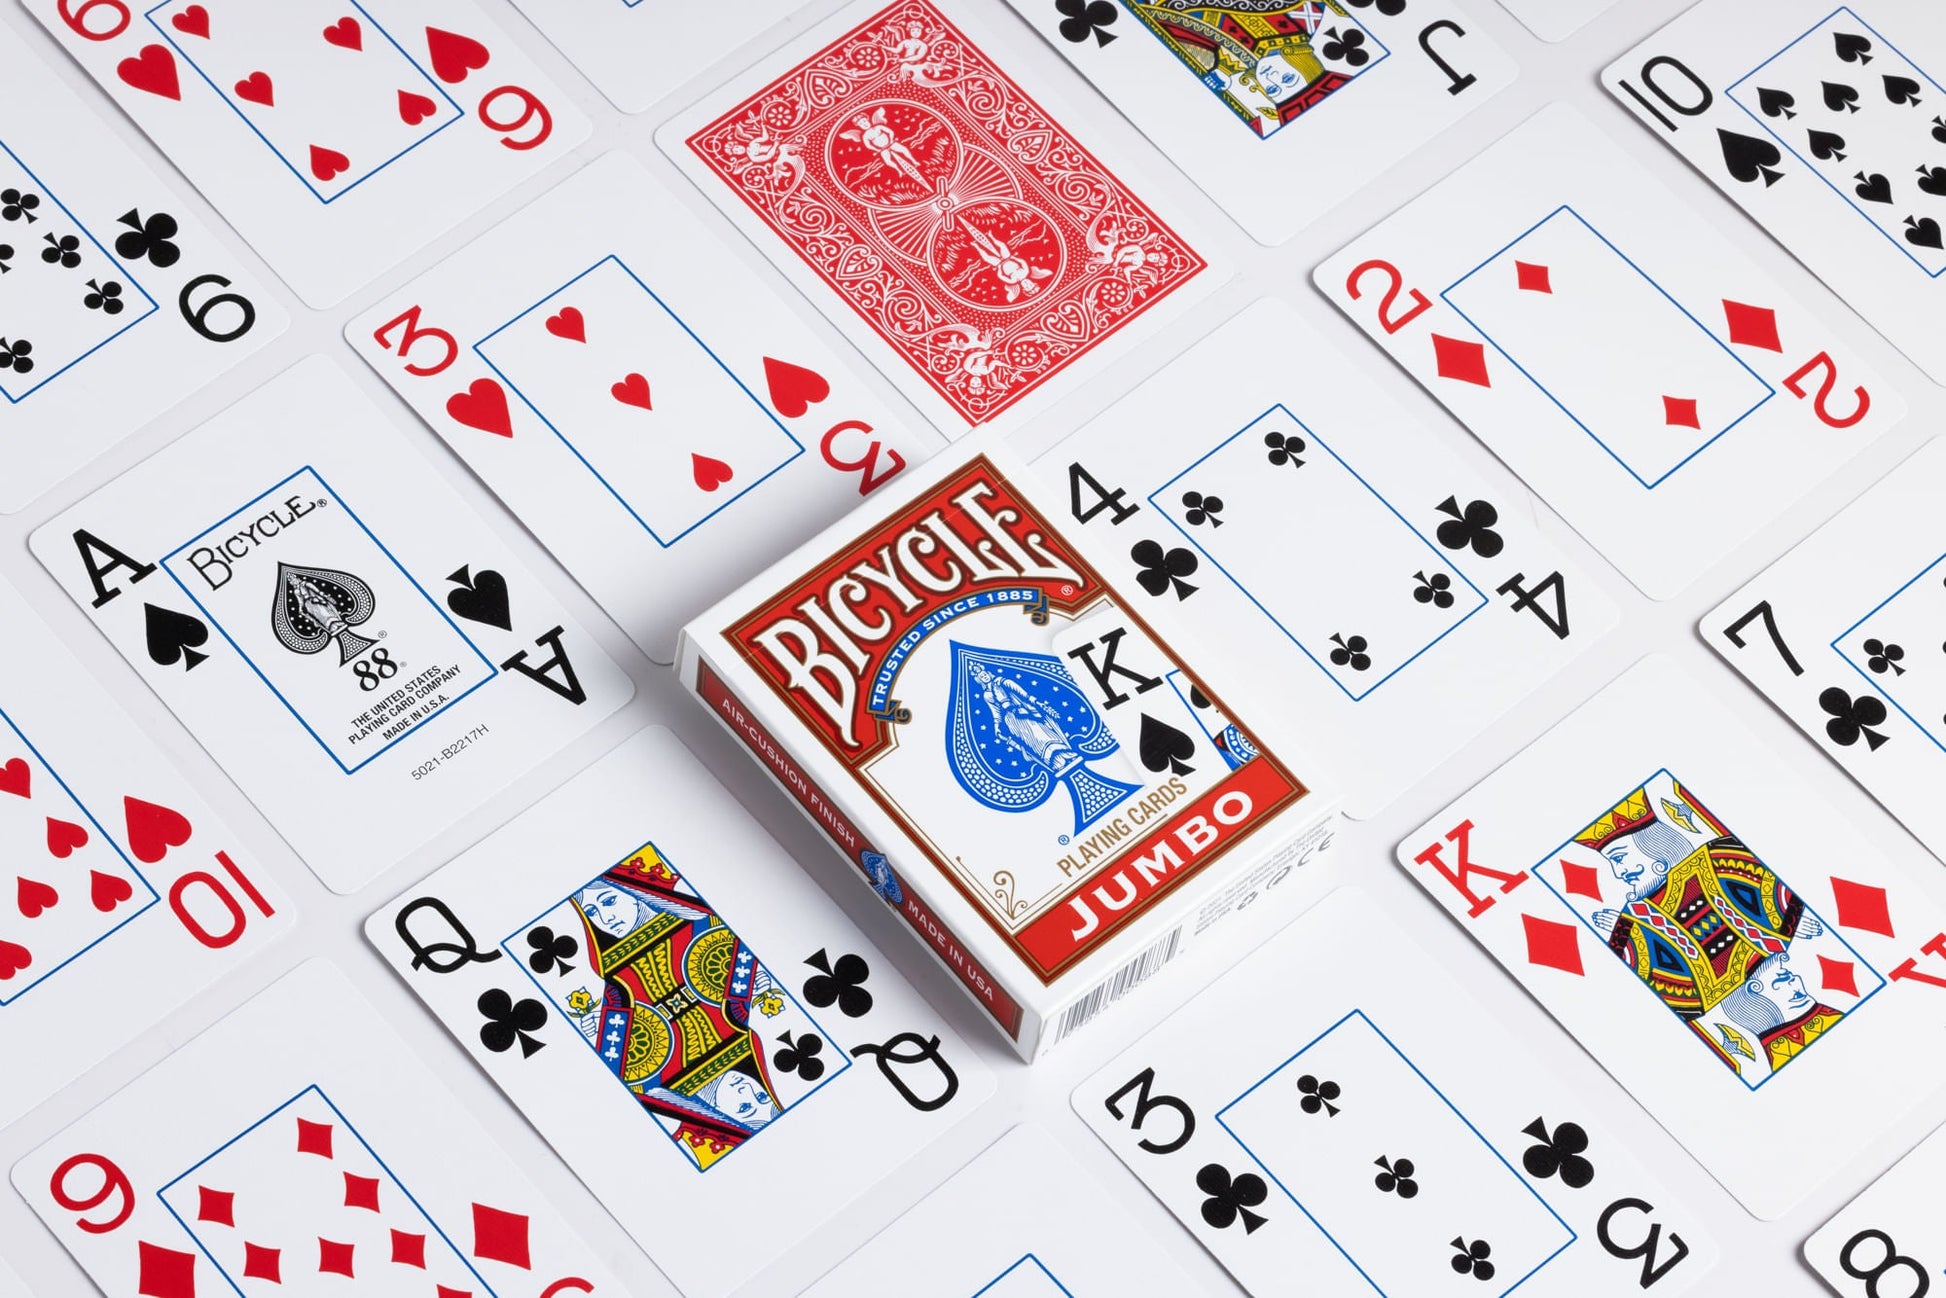 Poker cheating device: Bicycle Jumbo UV Marked Cards